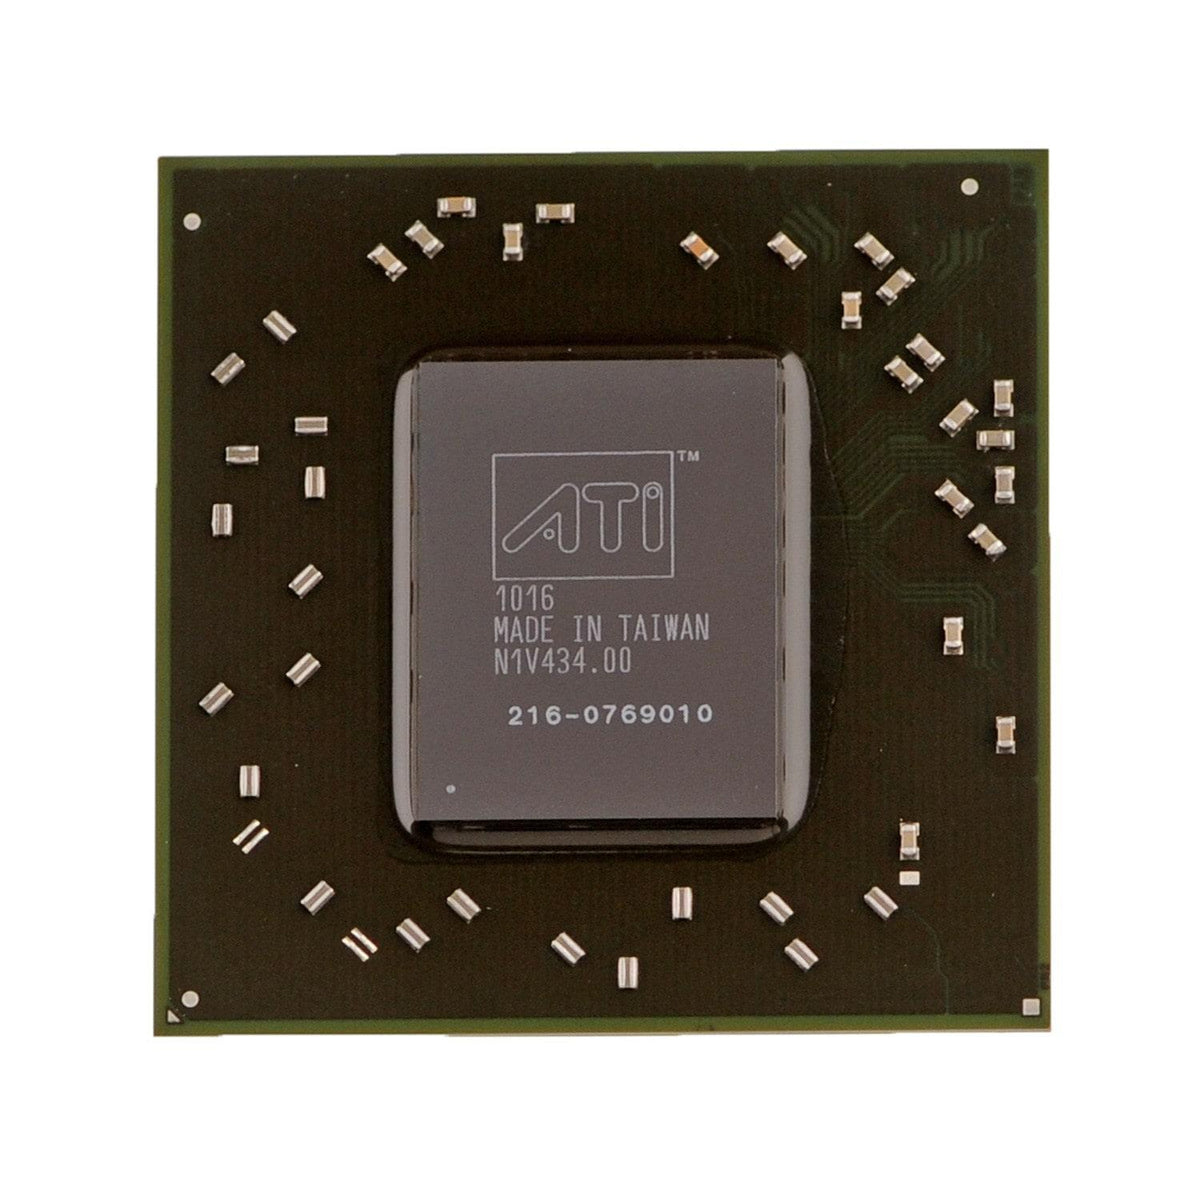 GPU ATI 216-0769010 GRAPHIC VIDEO IC CHIP FOR IMAC 27" A1312 (MID 2010)